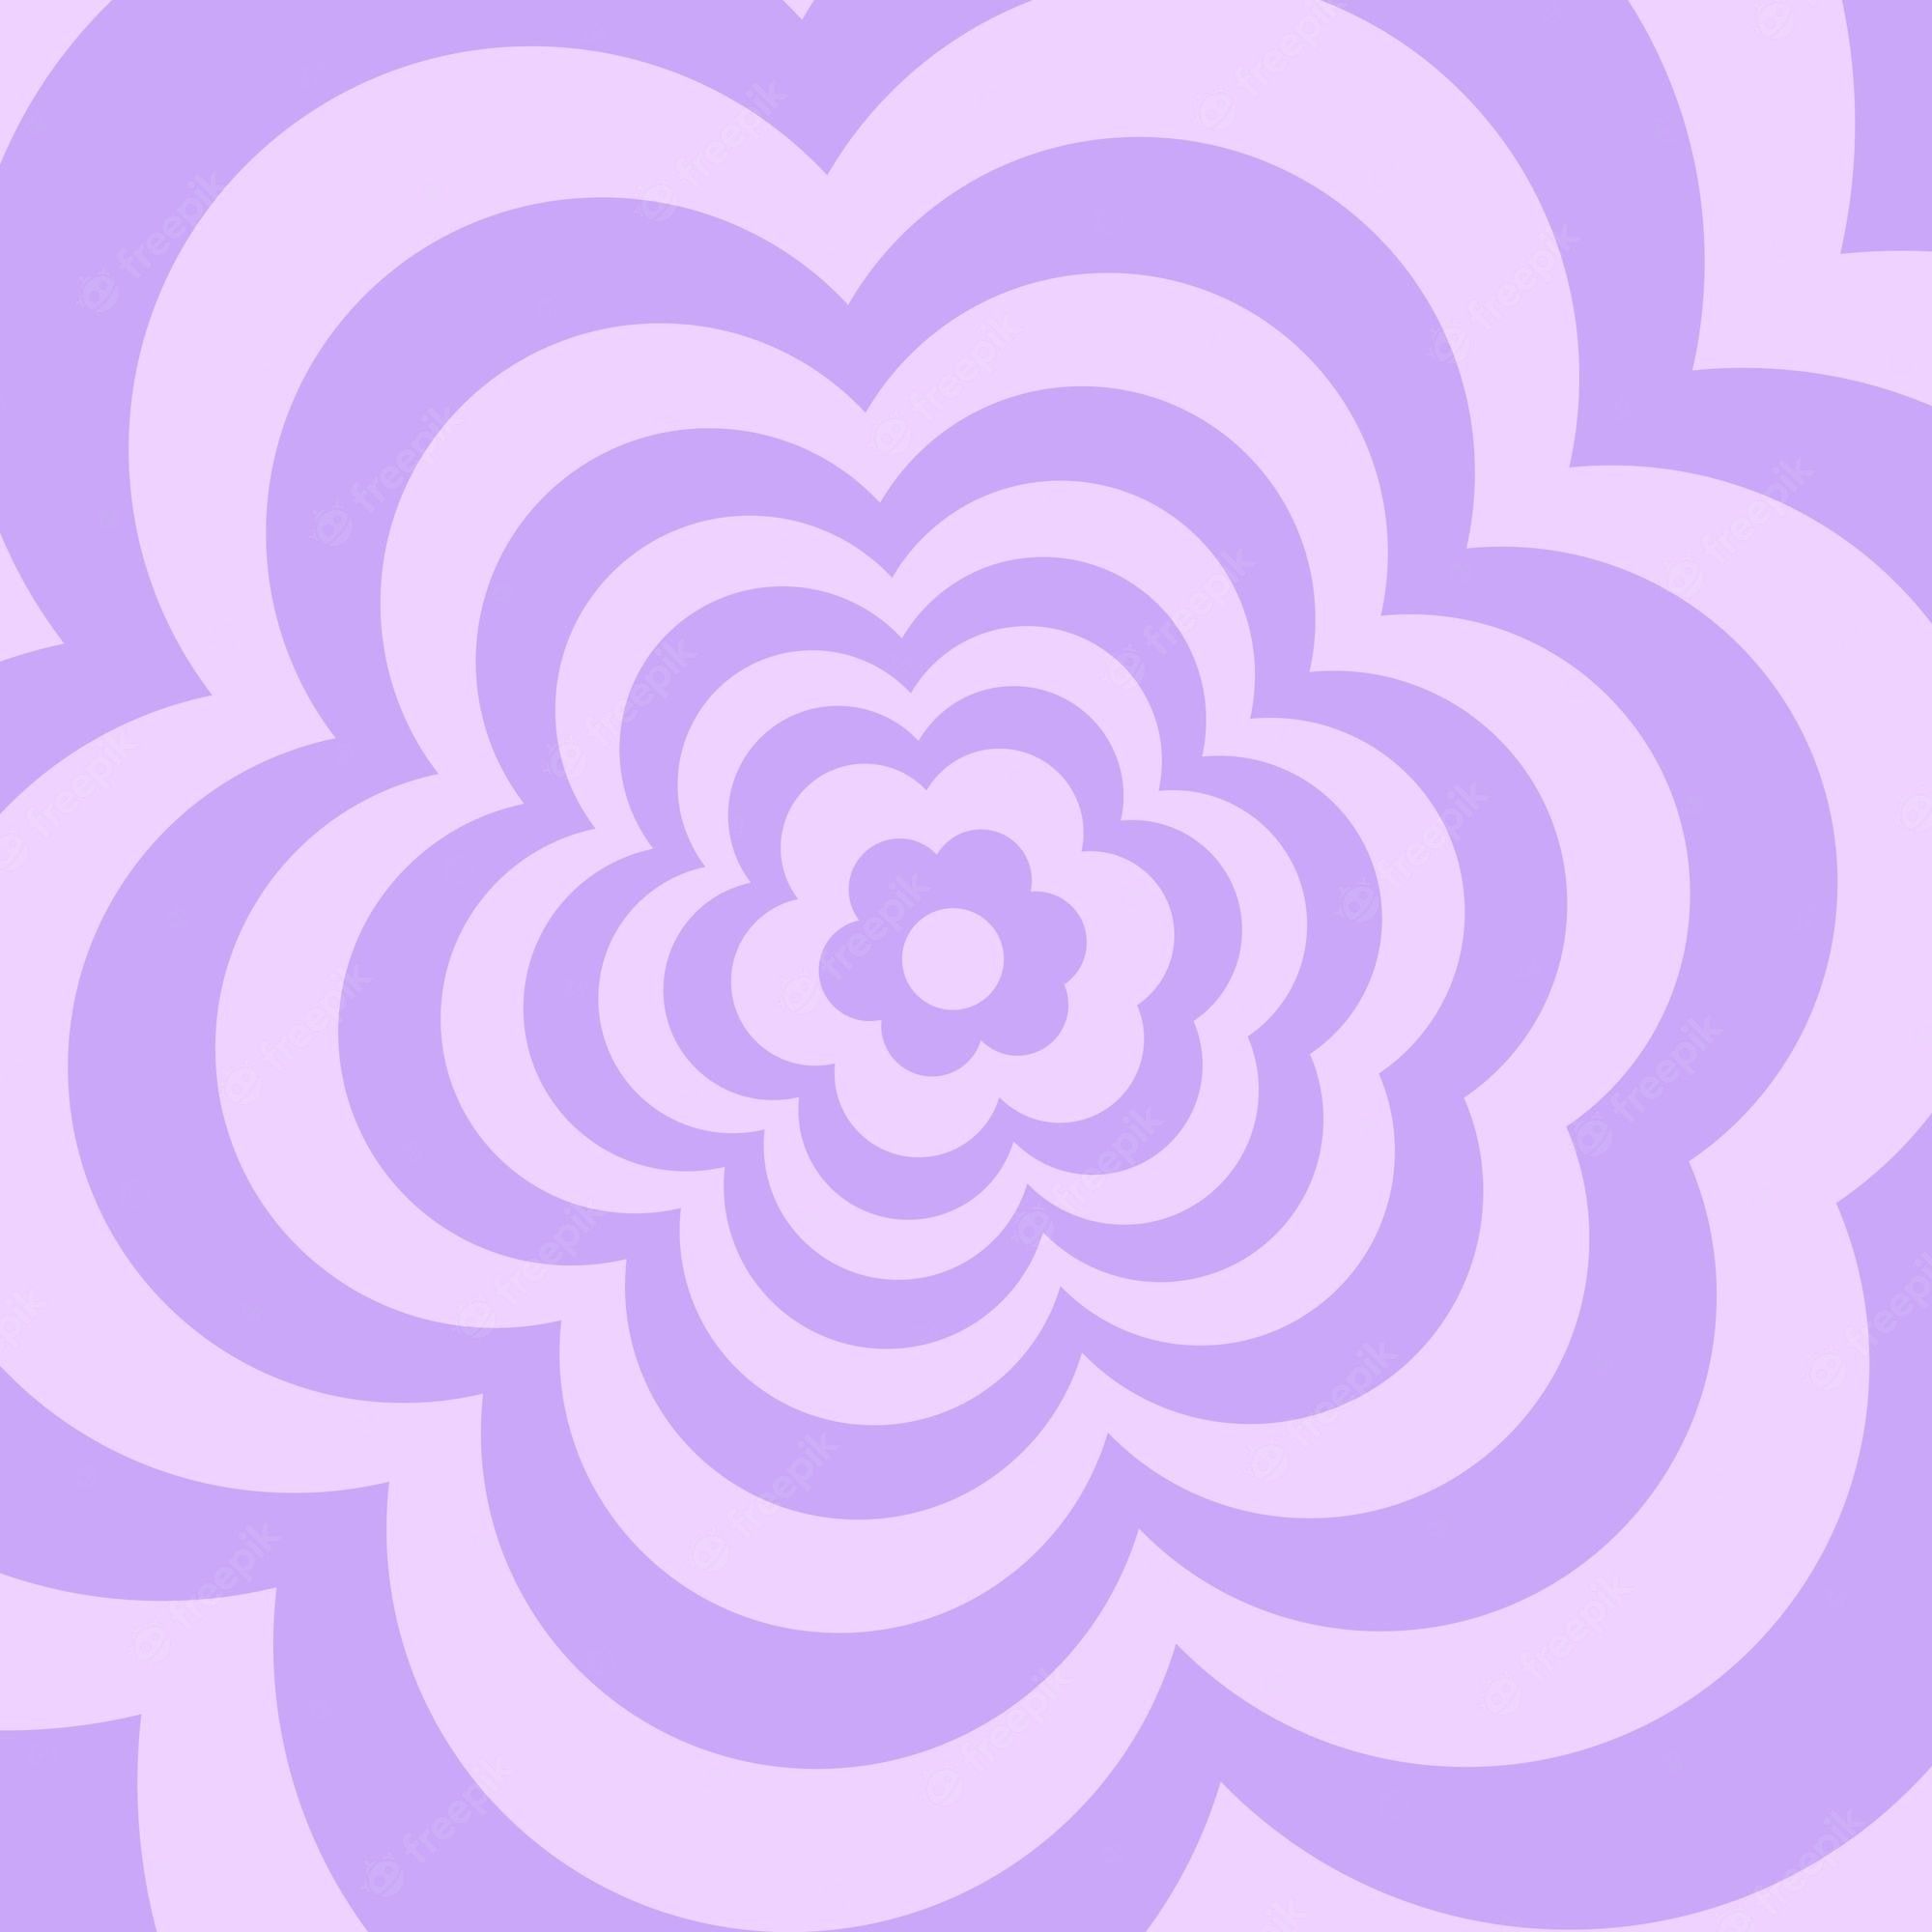 Premium Vector. Aesthetic retro daisy flower background in trendy y2k 90s style gradient lilac purple pastel